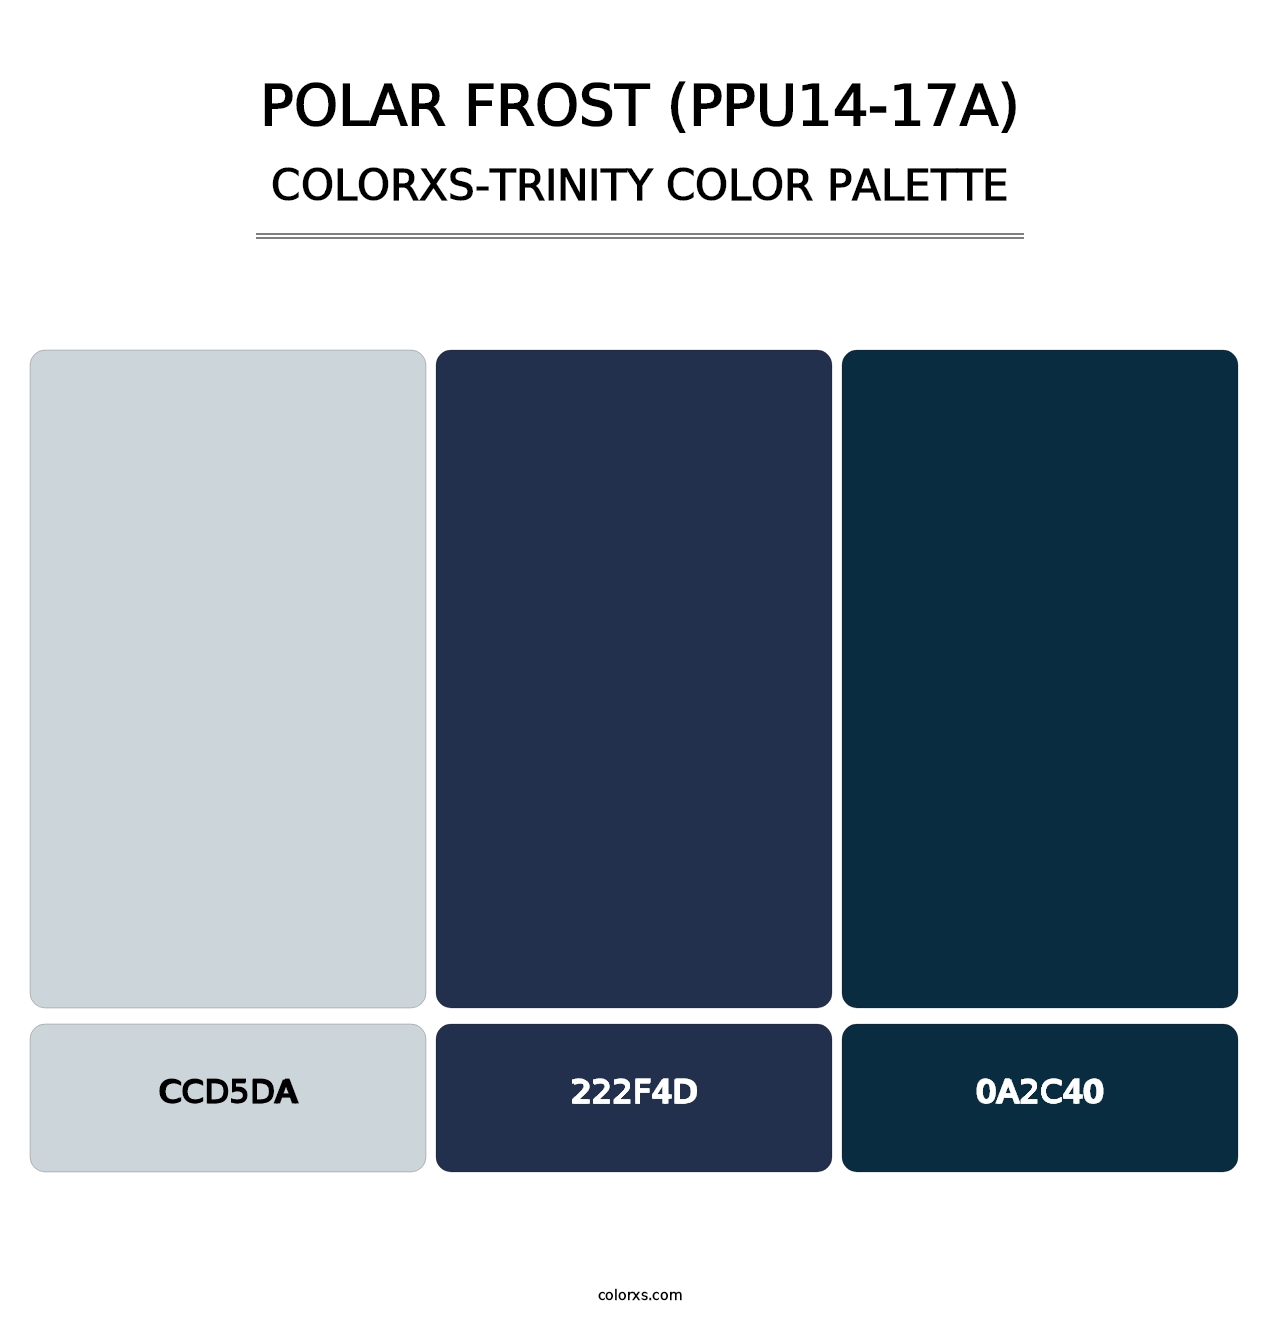 Polar Frost (PPU14-17A) - Colorxs Trinity Palette